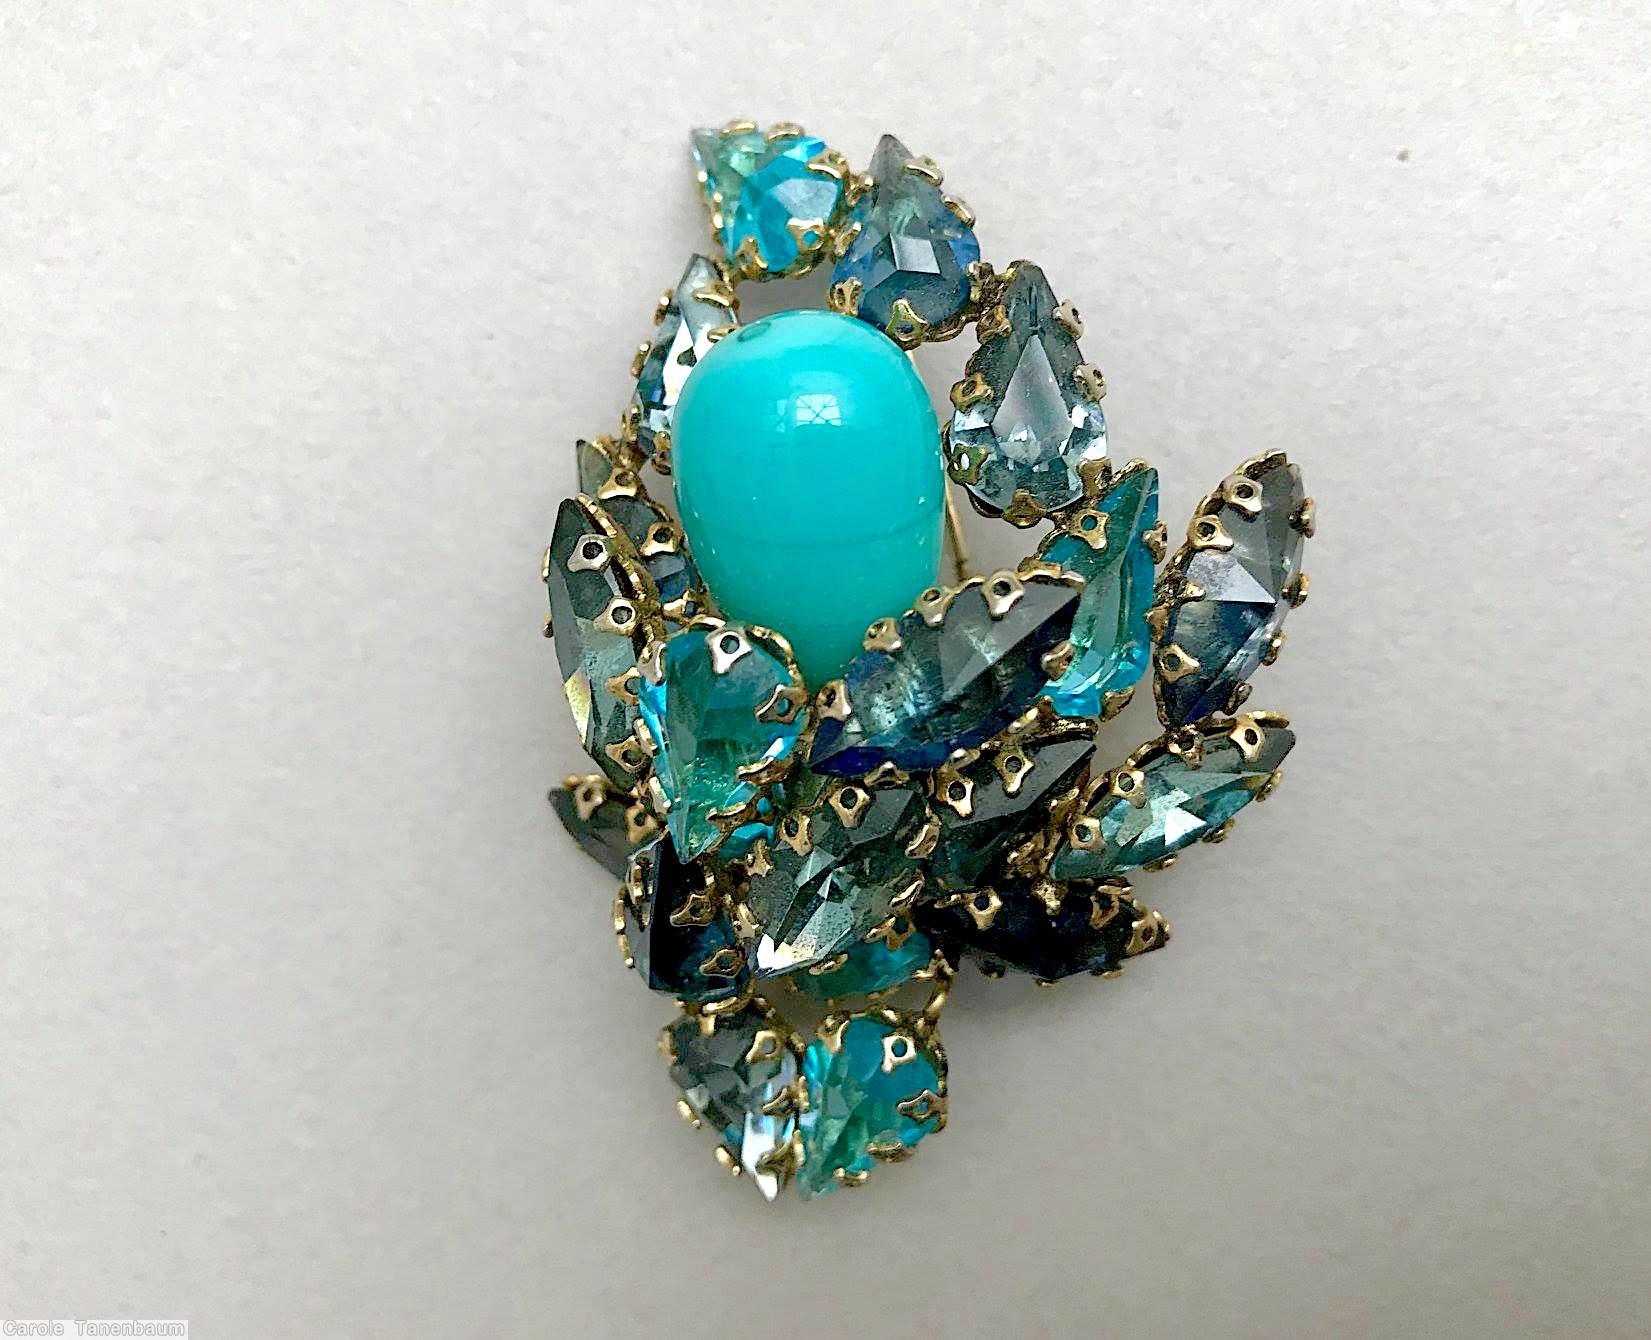 Schreiner swirled bead pin 1 bubble aqua bubble clear blue navette jewelry